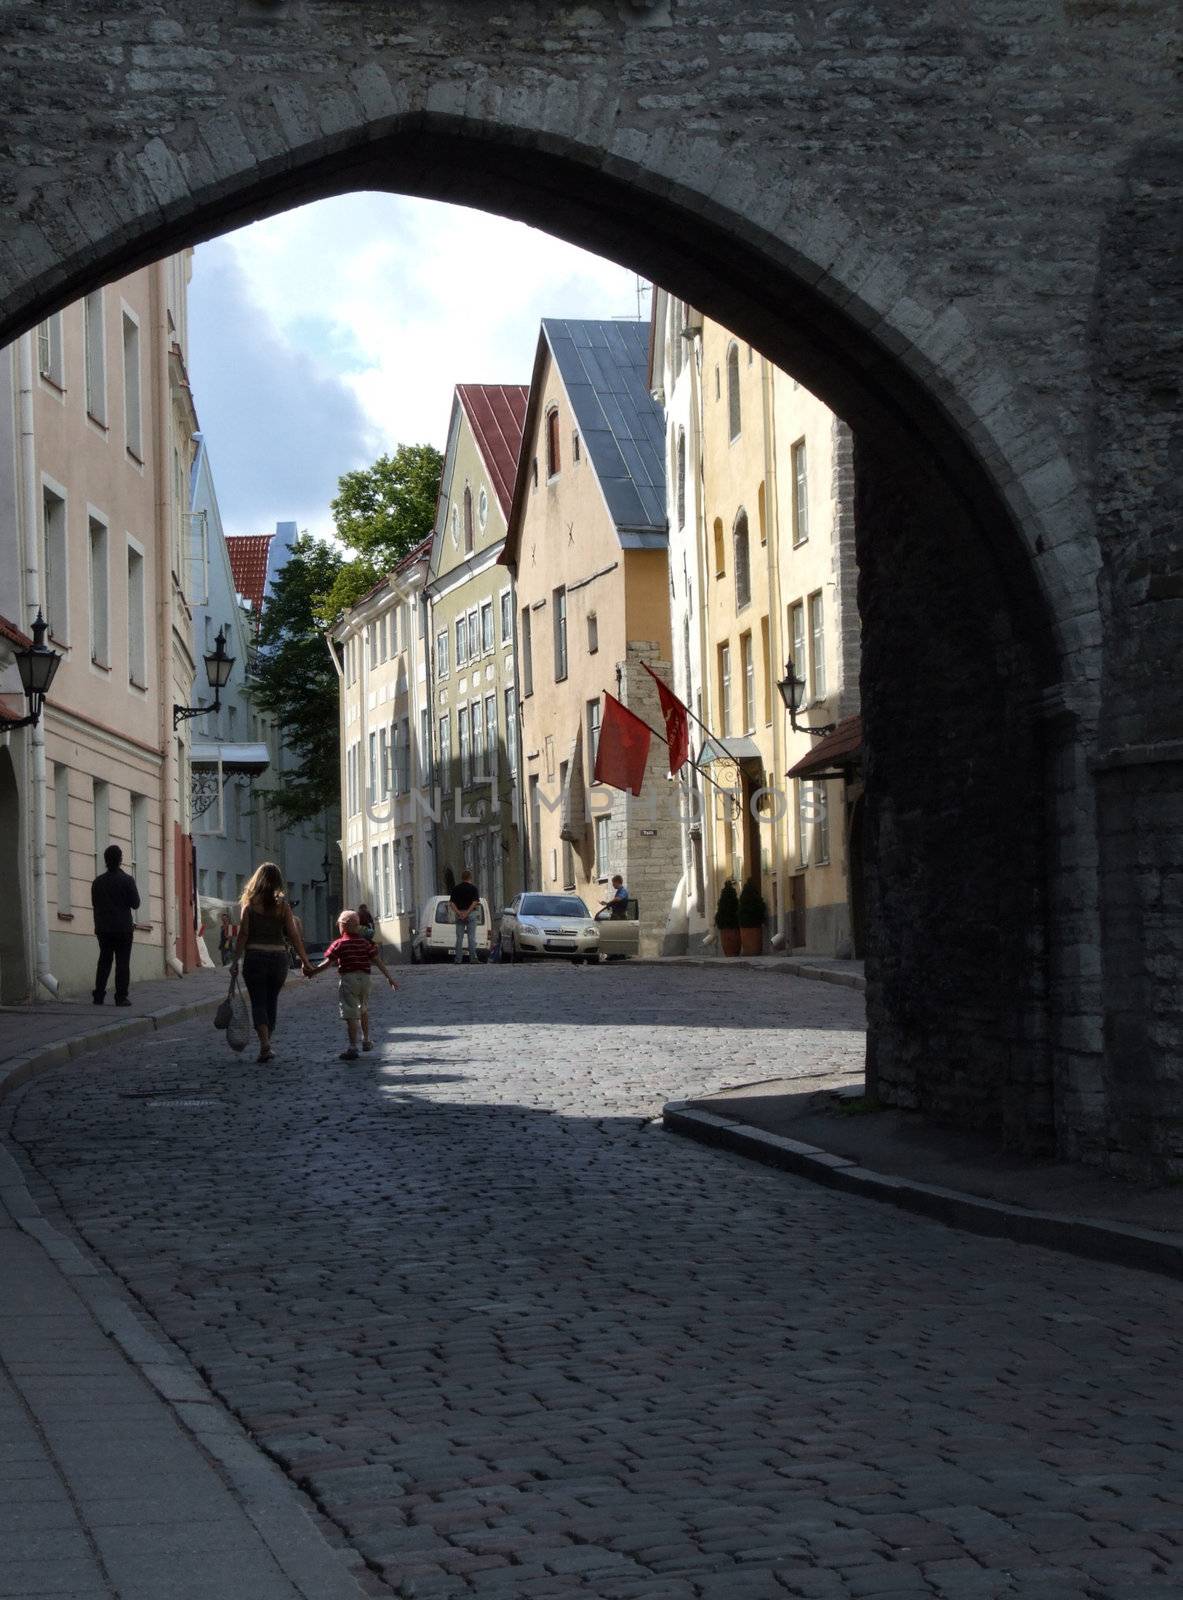 Tallinn city walls - entrance gate. Beautiful architecture of Estonian capital city.